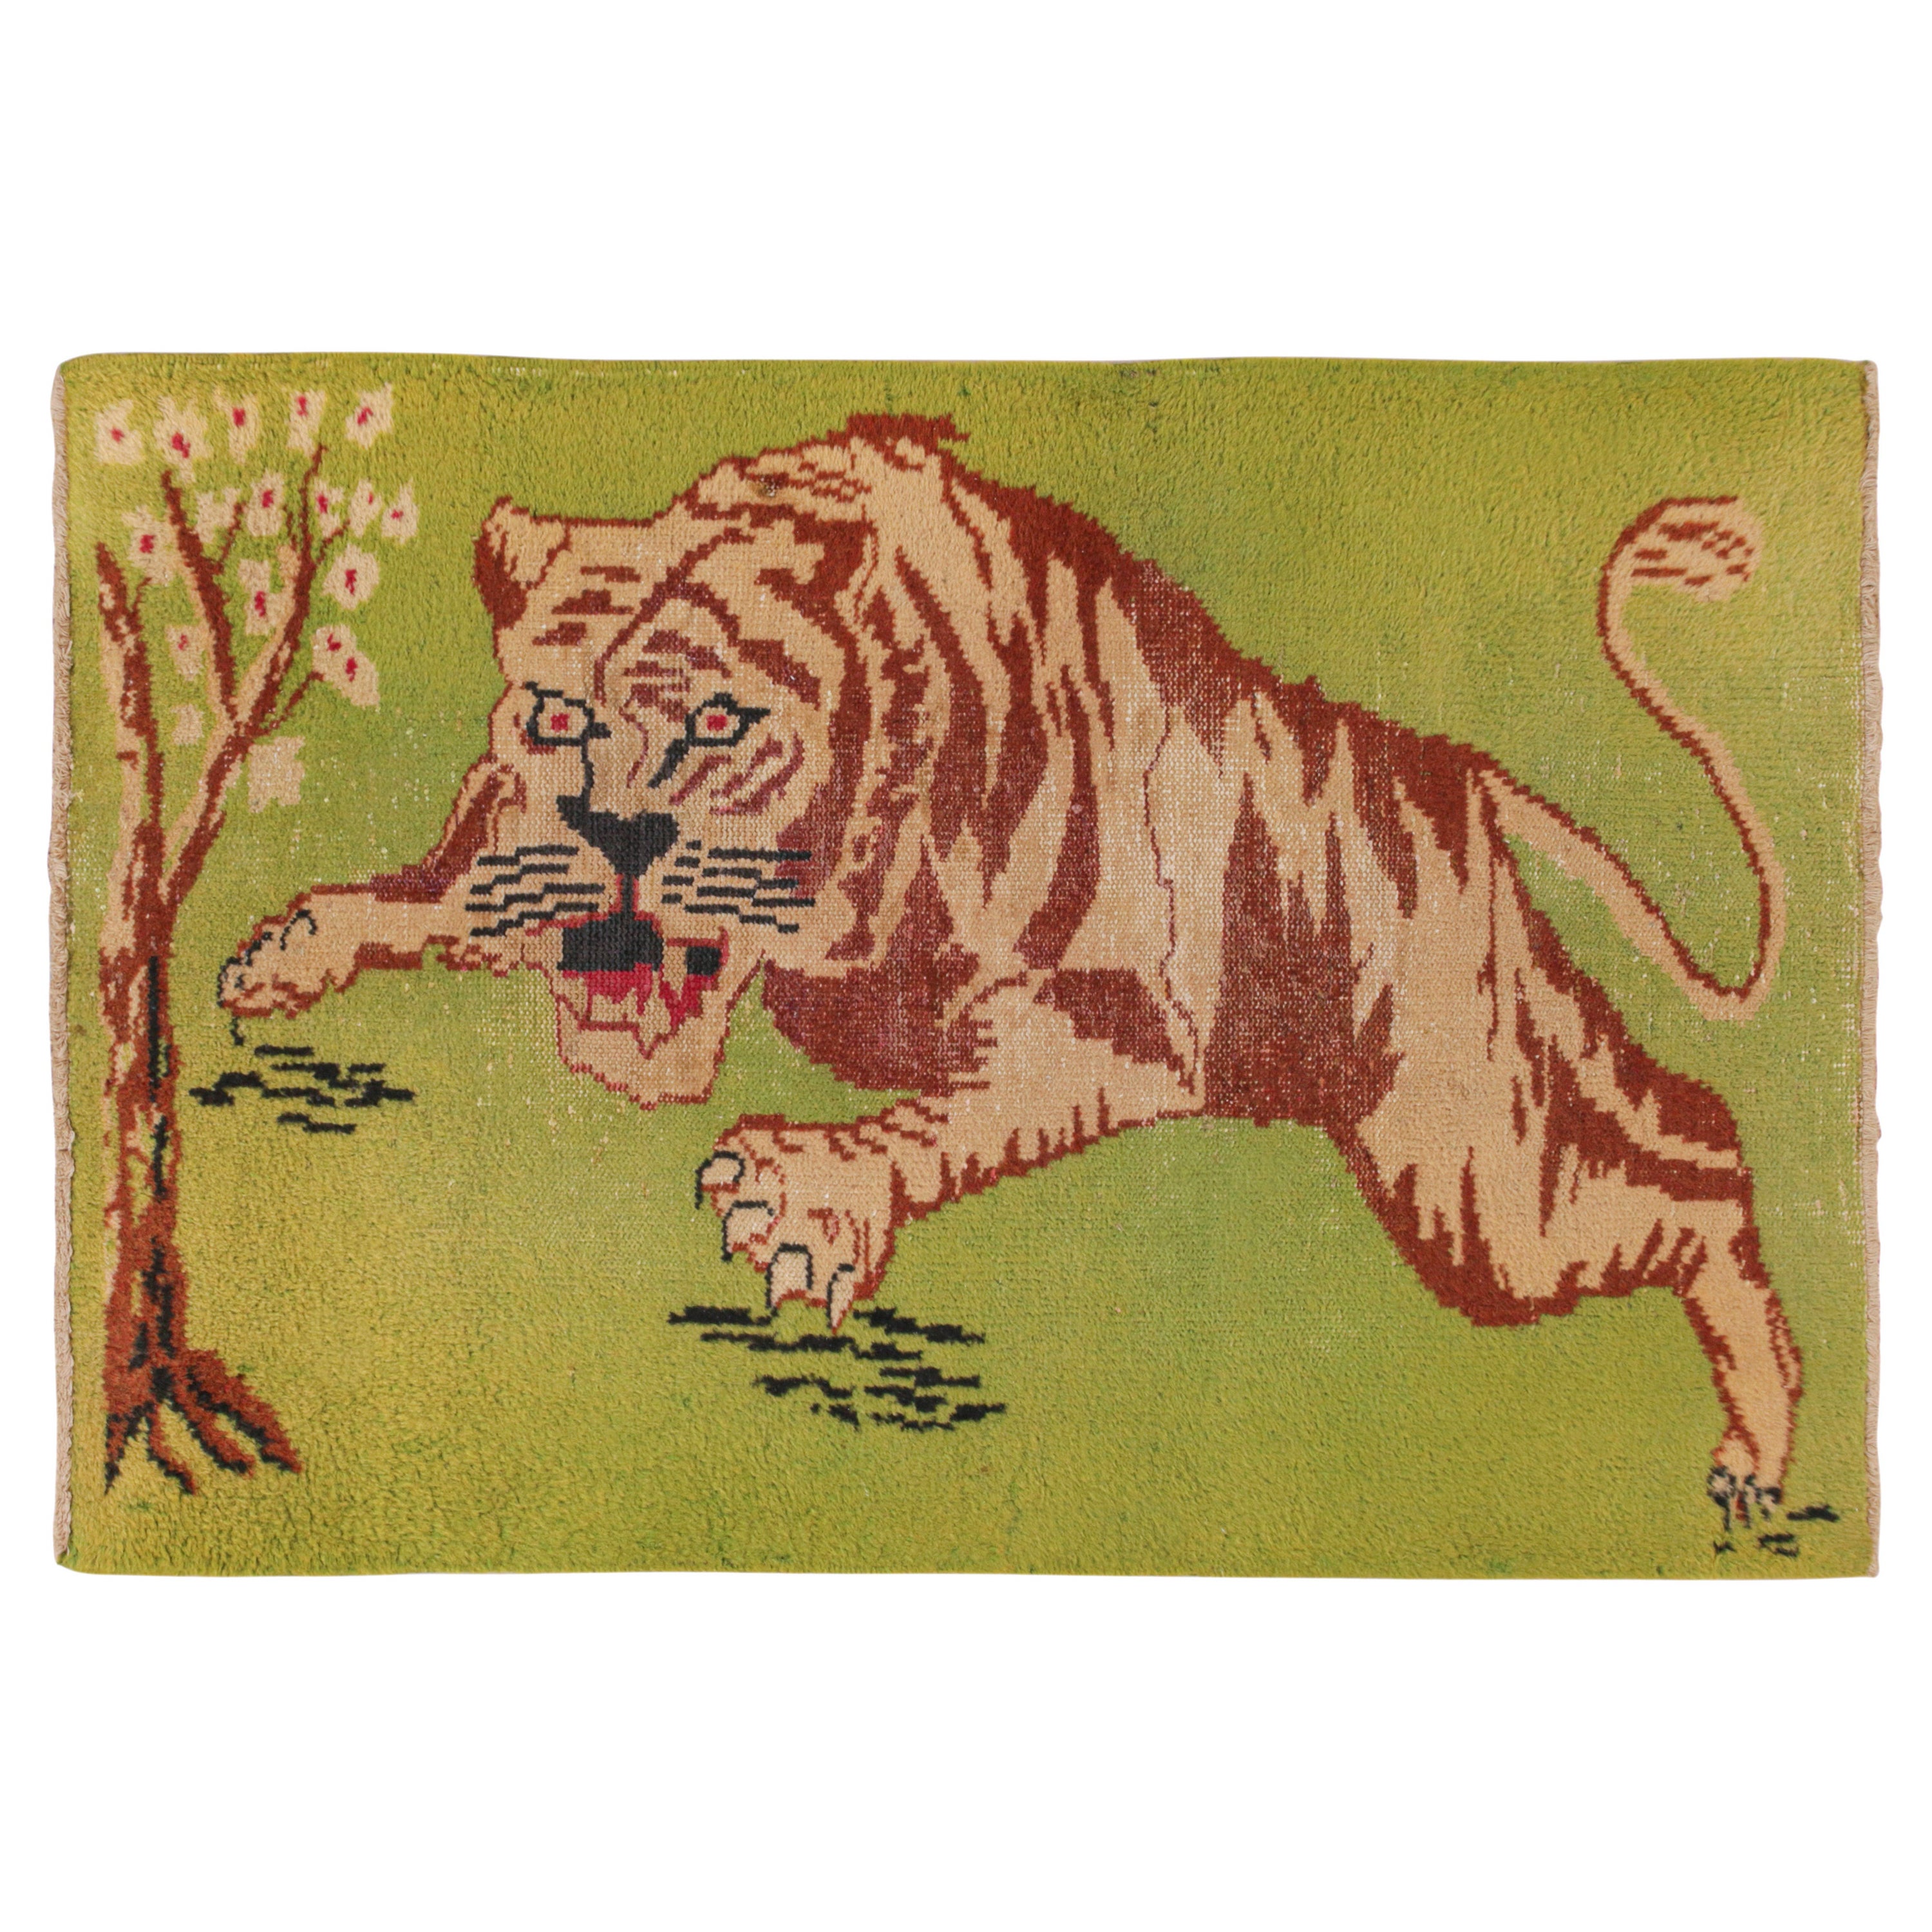 Vintage Zeki Müren Rug in Green with Beige-Brown Tiger Pictorial by Rug & Kilim